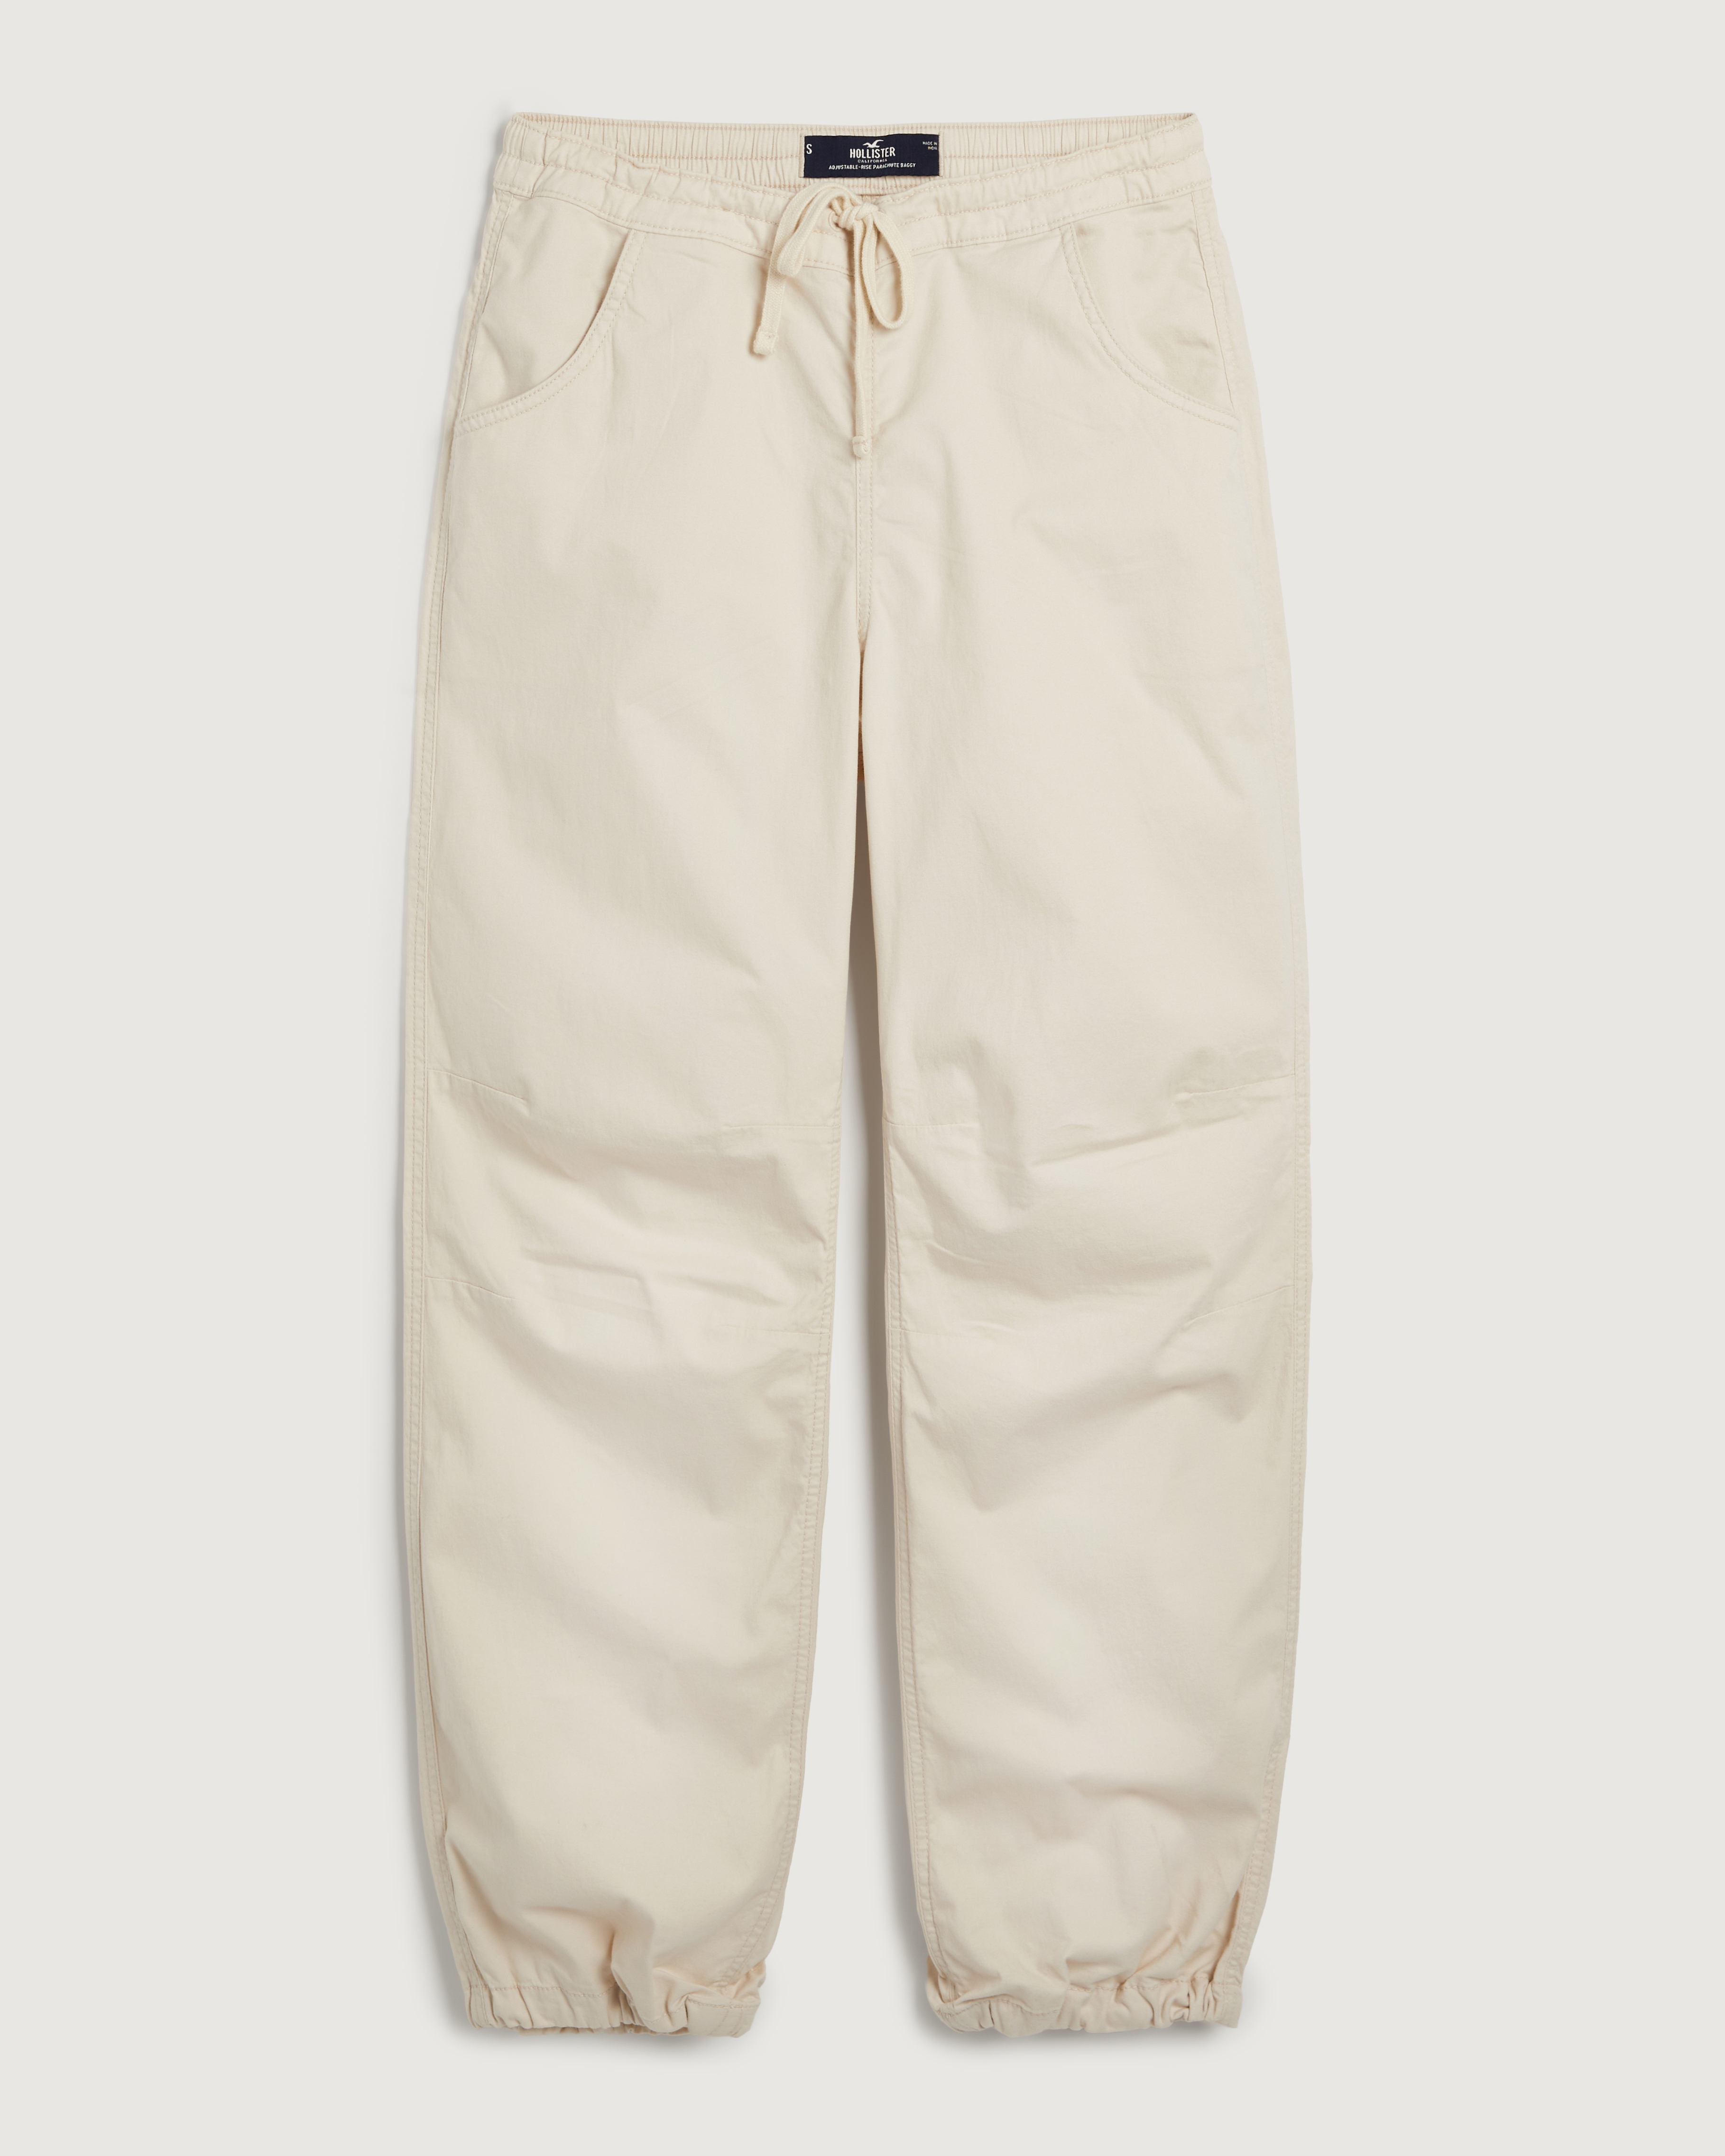 Empyre Ripcord Medium Grey Parachute Pants